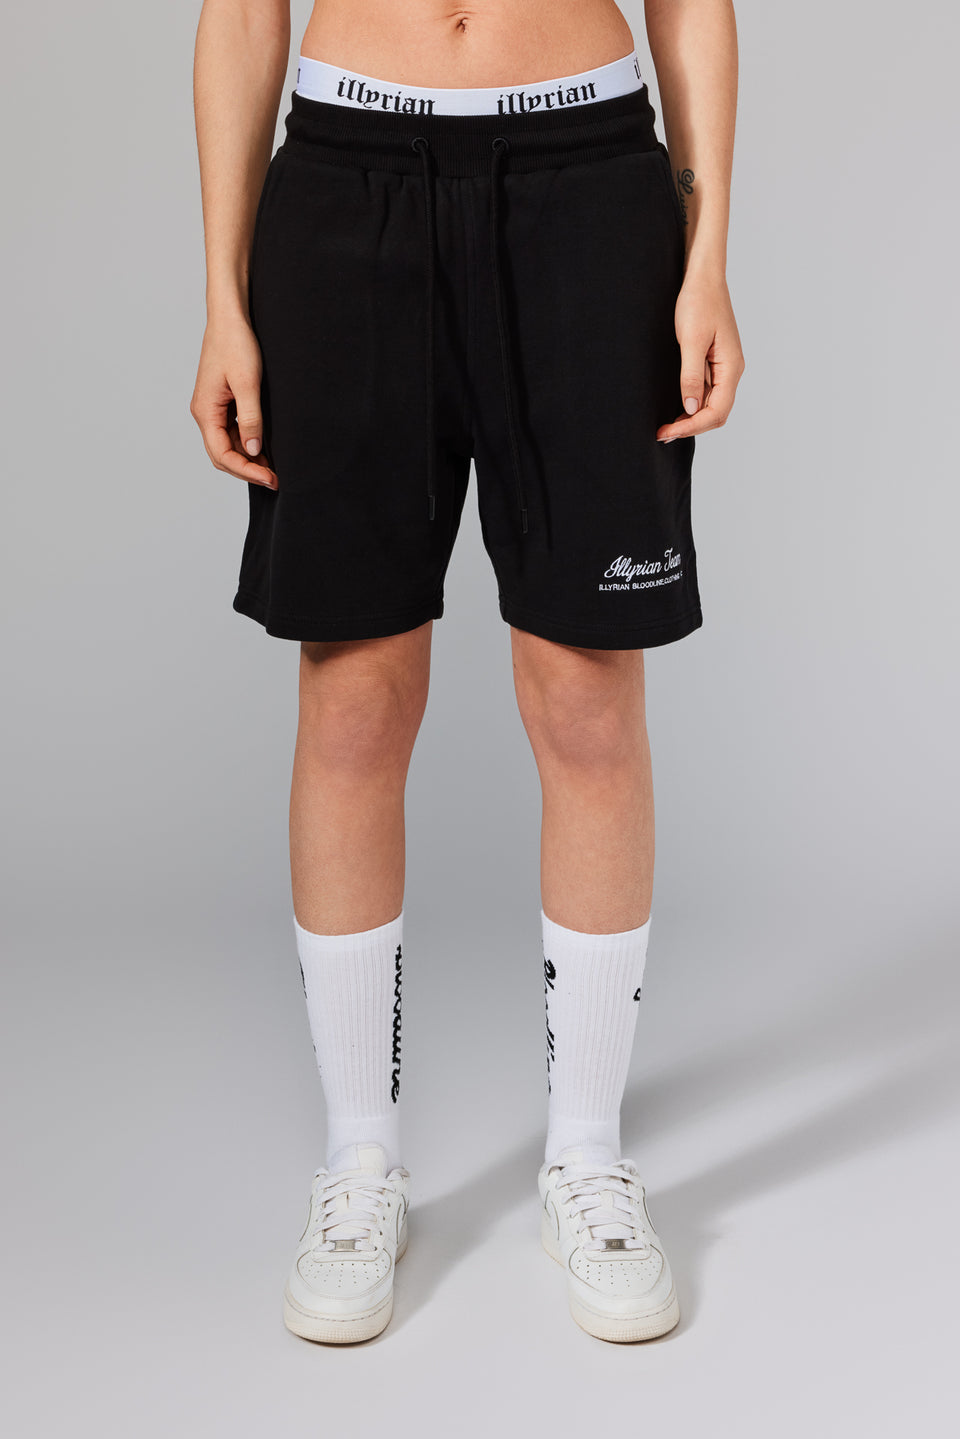 Illyrian SS24 Shorts - Black